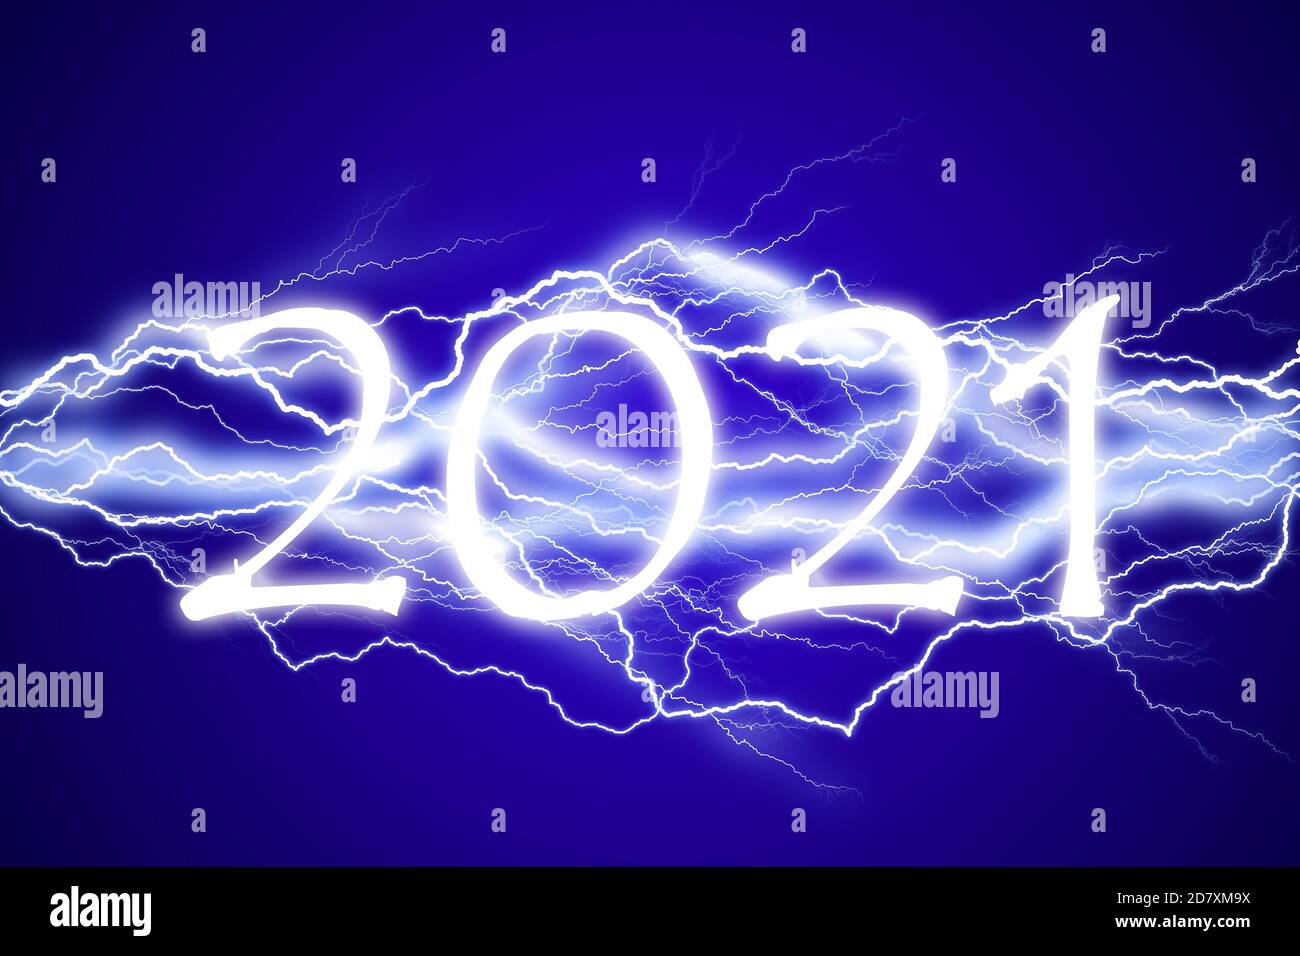 2021, lightning effect at night, striking new year greetings Stock Photo